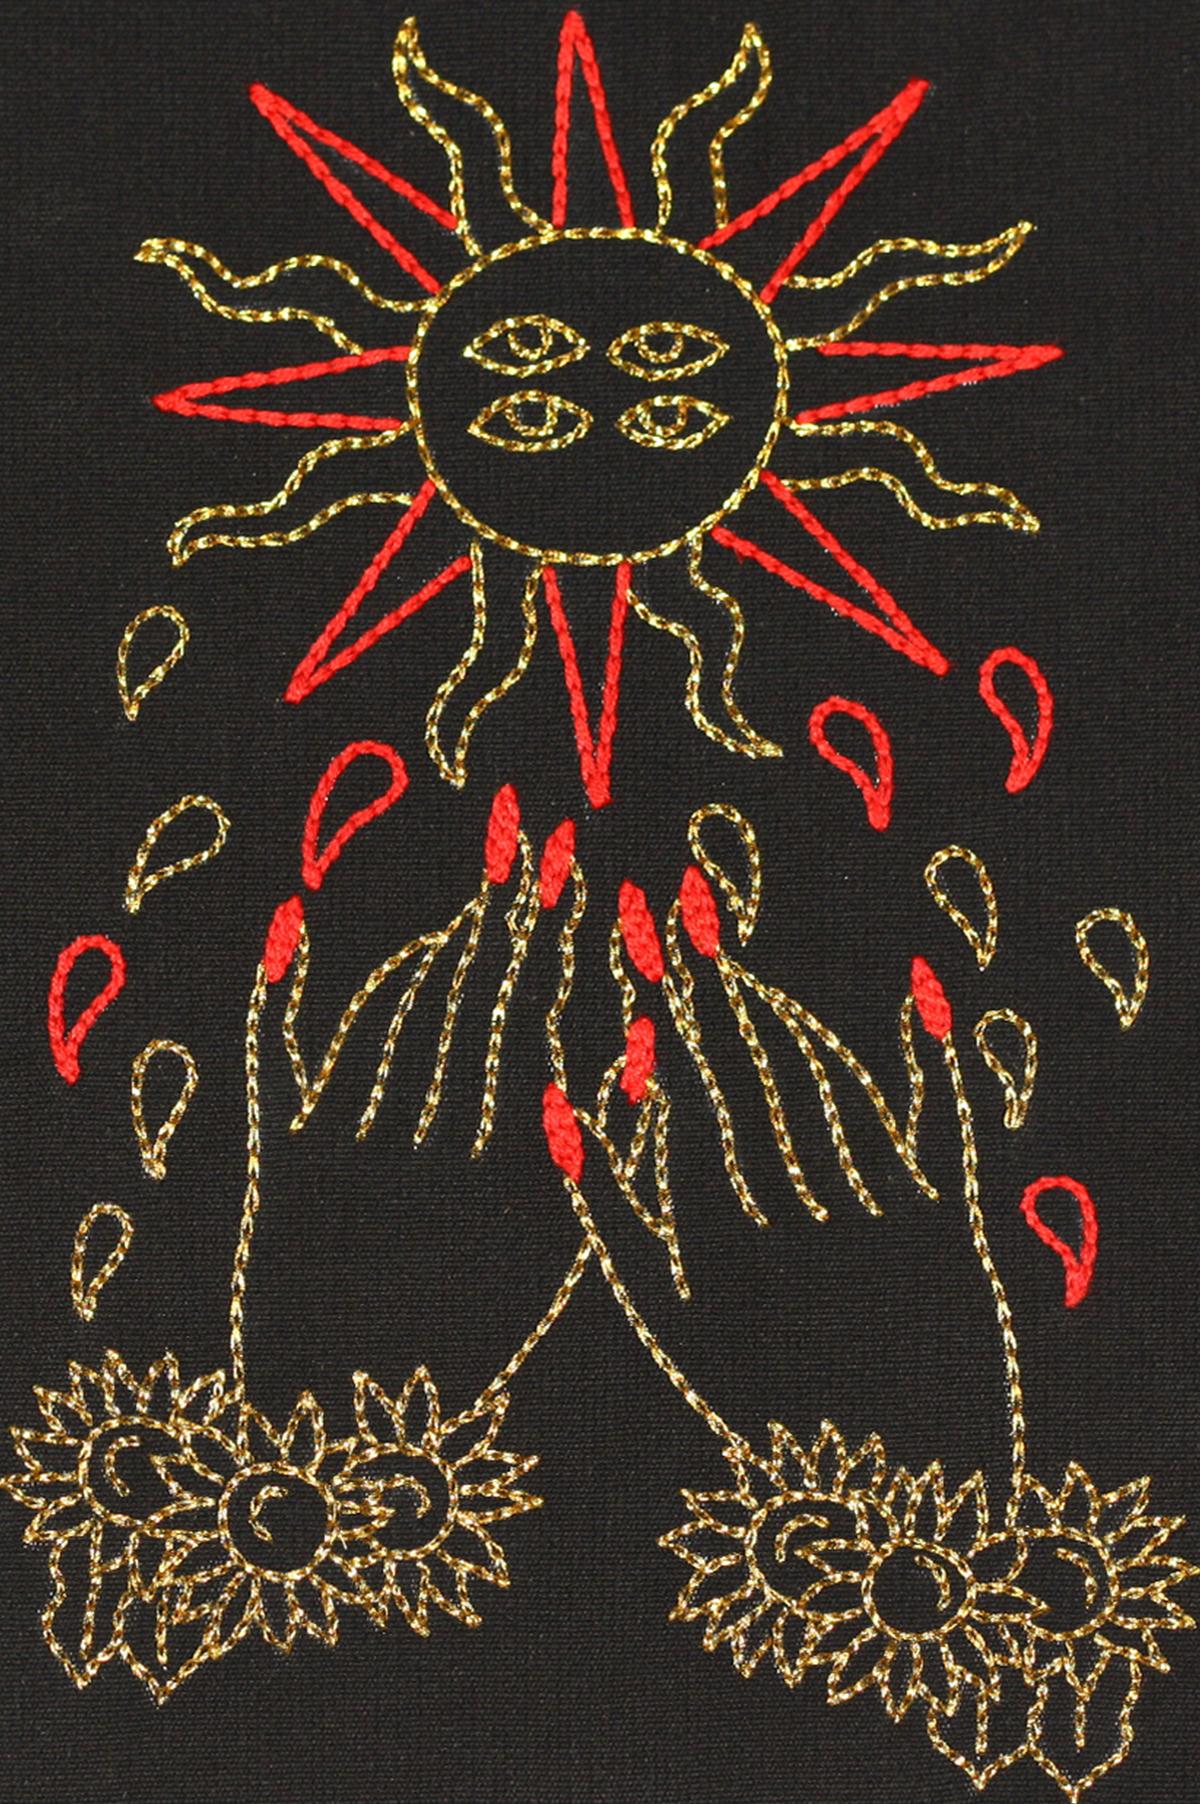 El Sol, 2019 by Maria Jose Franco Maldonado
From The Ventura Series. 
Embroidery thread on canvas
Image size: 27 cm H x 17 cm W
Frame size: 40 cm H x 30 cm W x 3 cm D
Unique

Blackwood frame with plexiglass
___
Maria Jose Franco Maldonado’s family